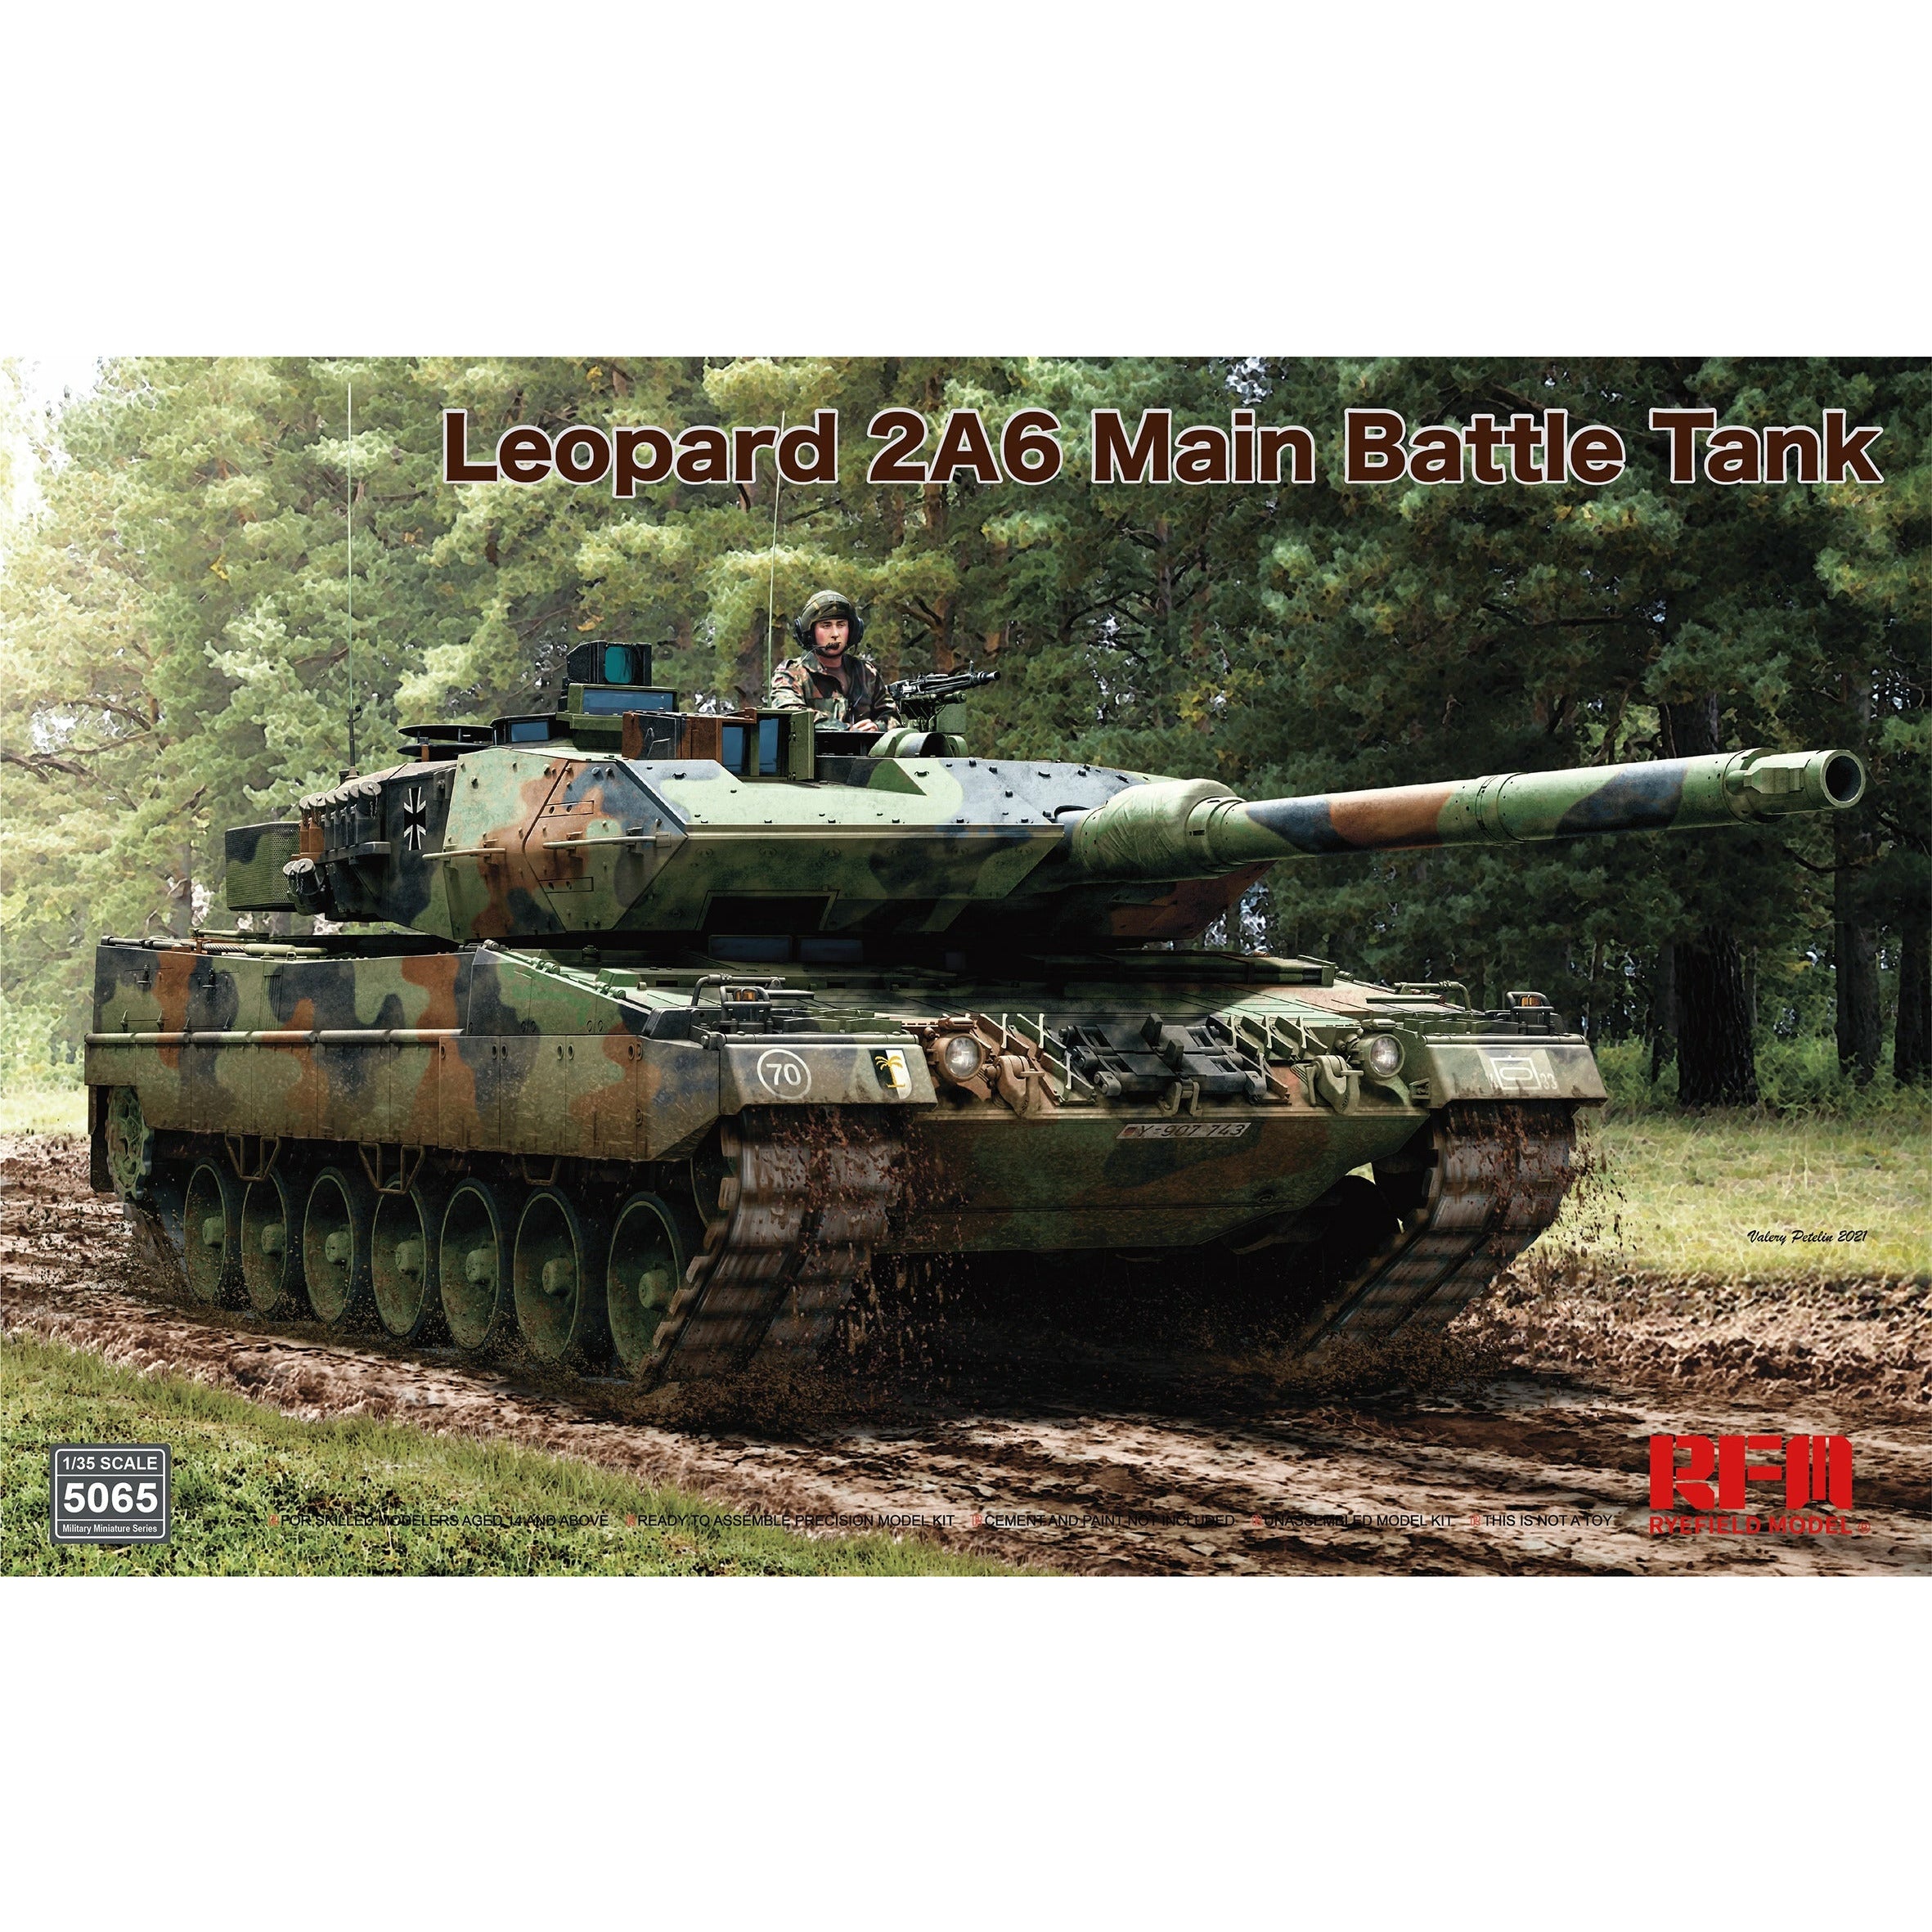 Leopard 2a6 Main Battle Tank w/ Workable Track 1/35 #RM-5065 by Ryefield Model